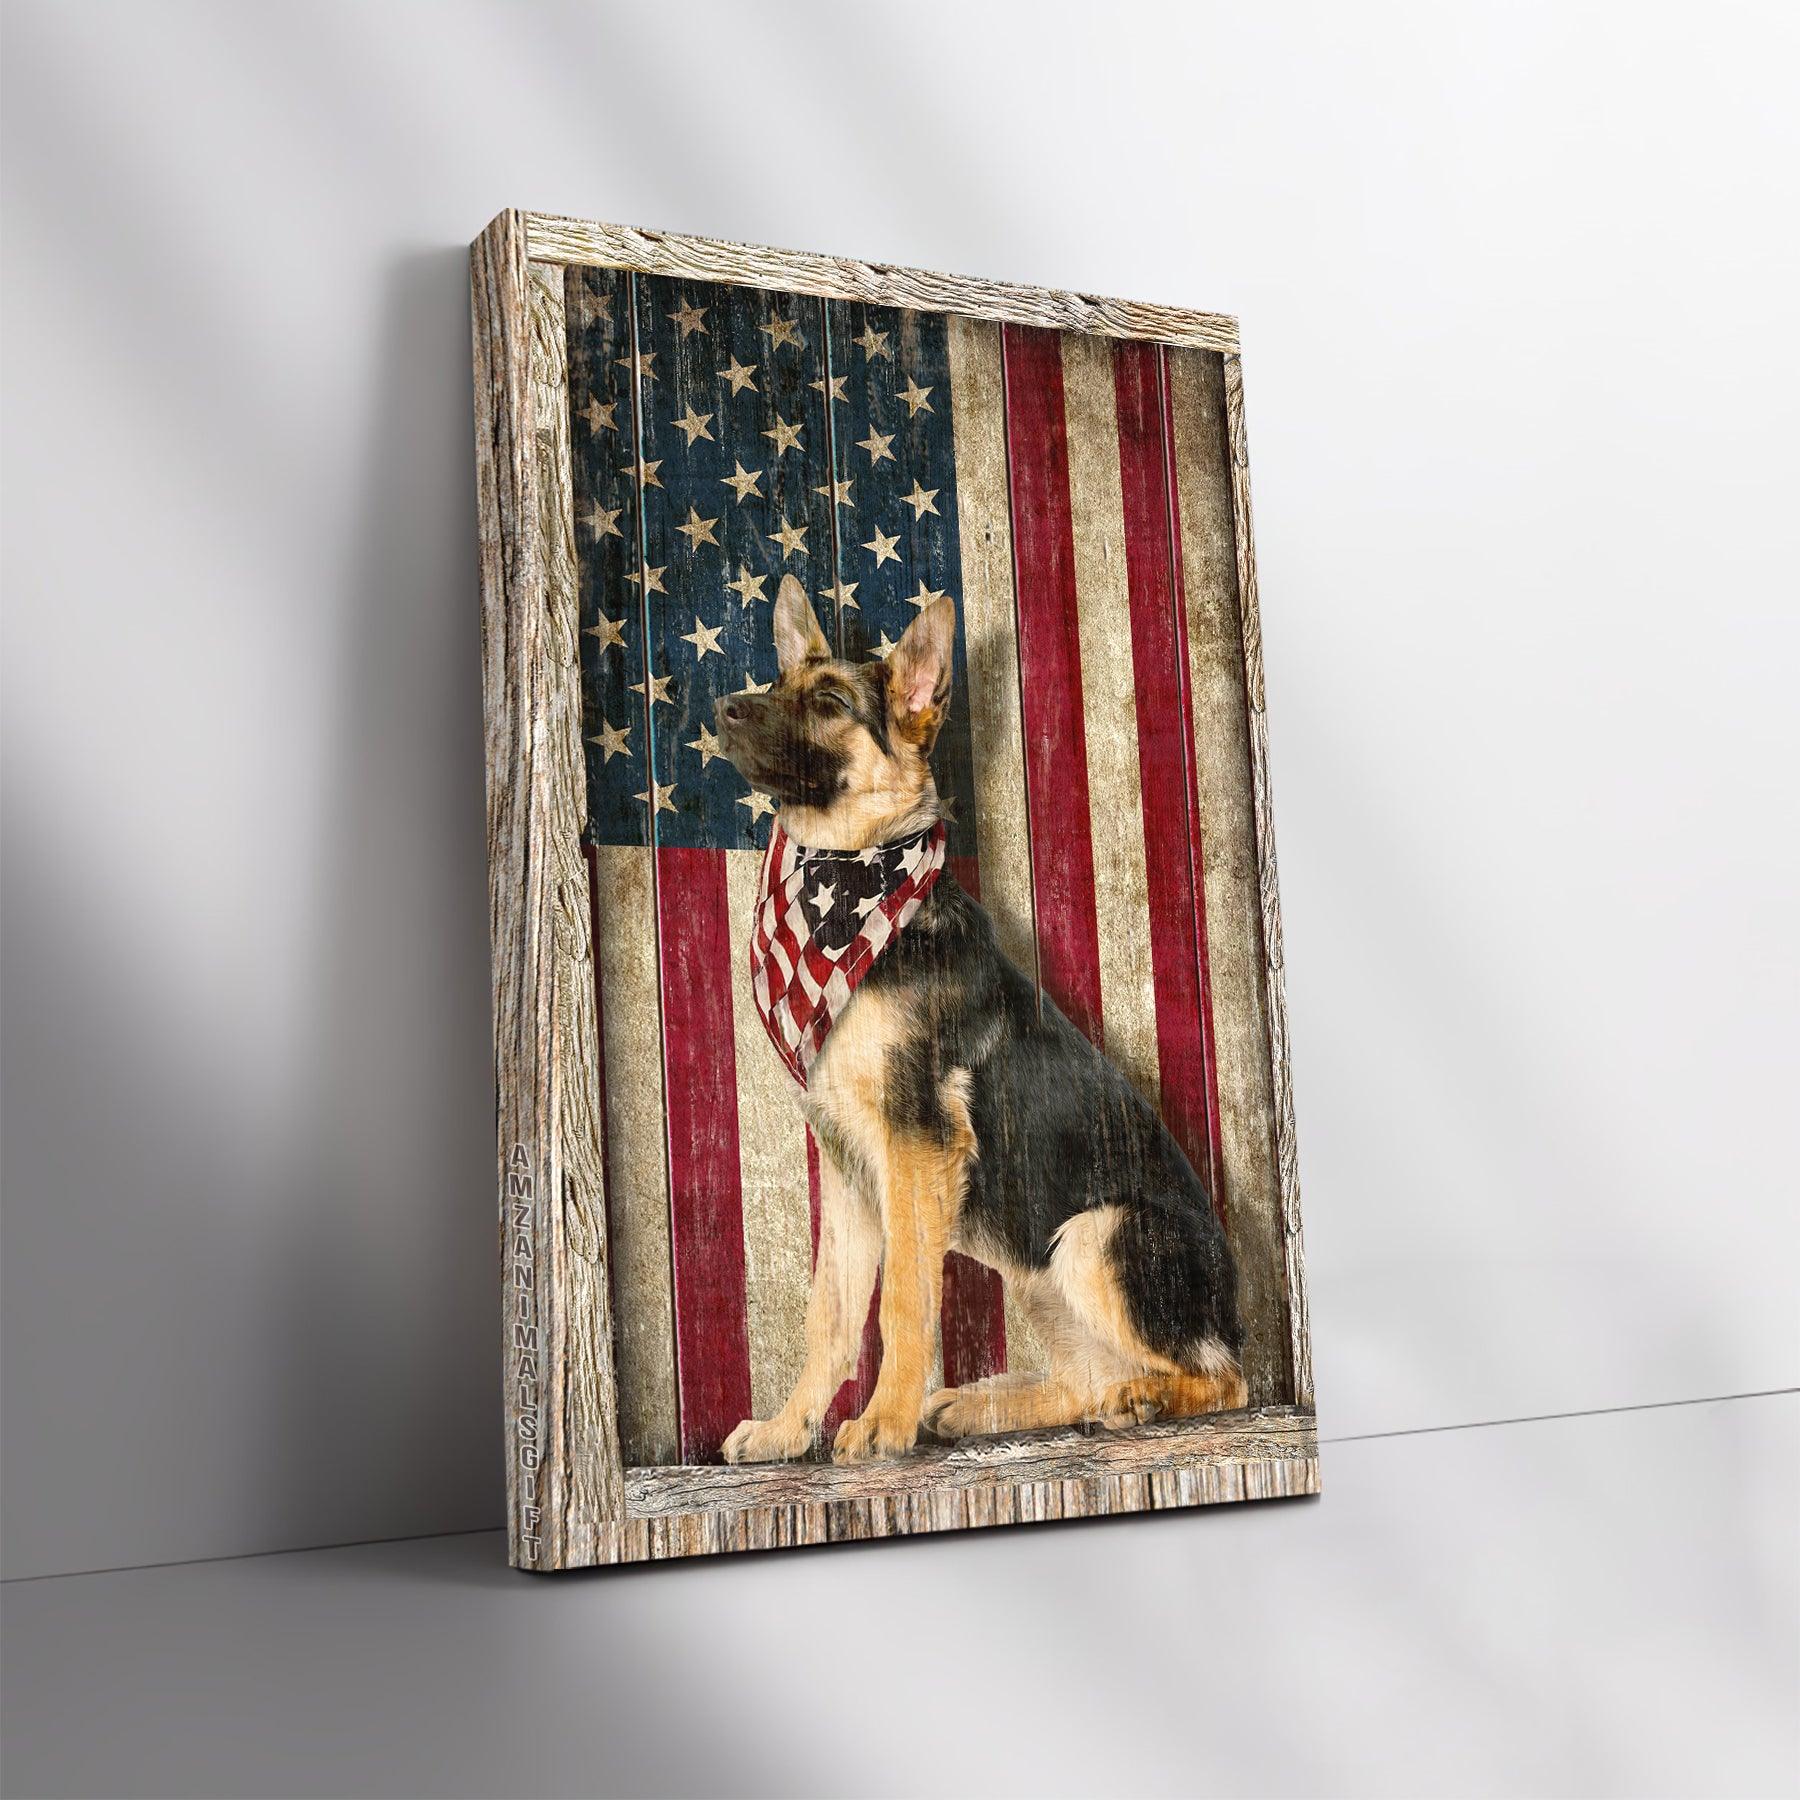 German Shepherd Portrait Premium Wrapped Canvas - German Shepherd Dog, American Flag canvas - Gift for German Shepherd lovers - Amzanimalsgift